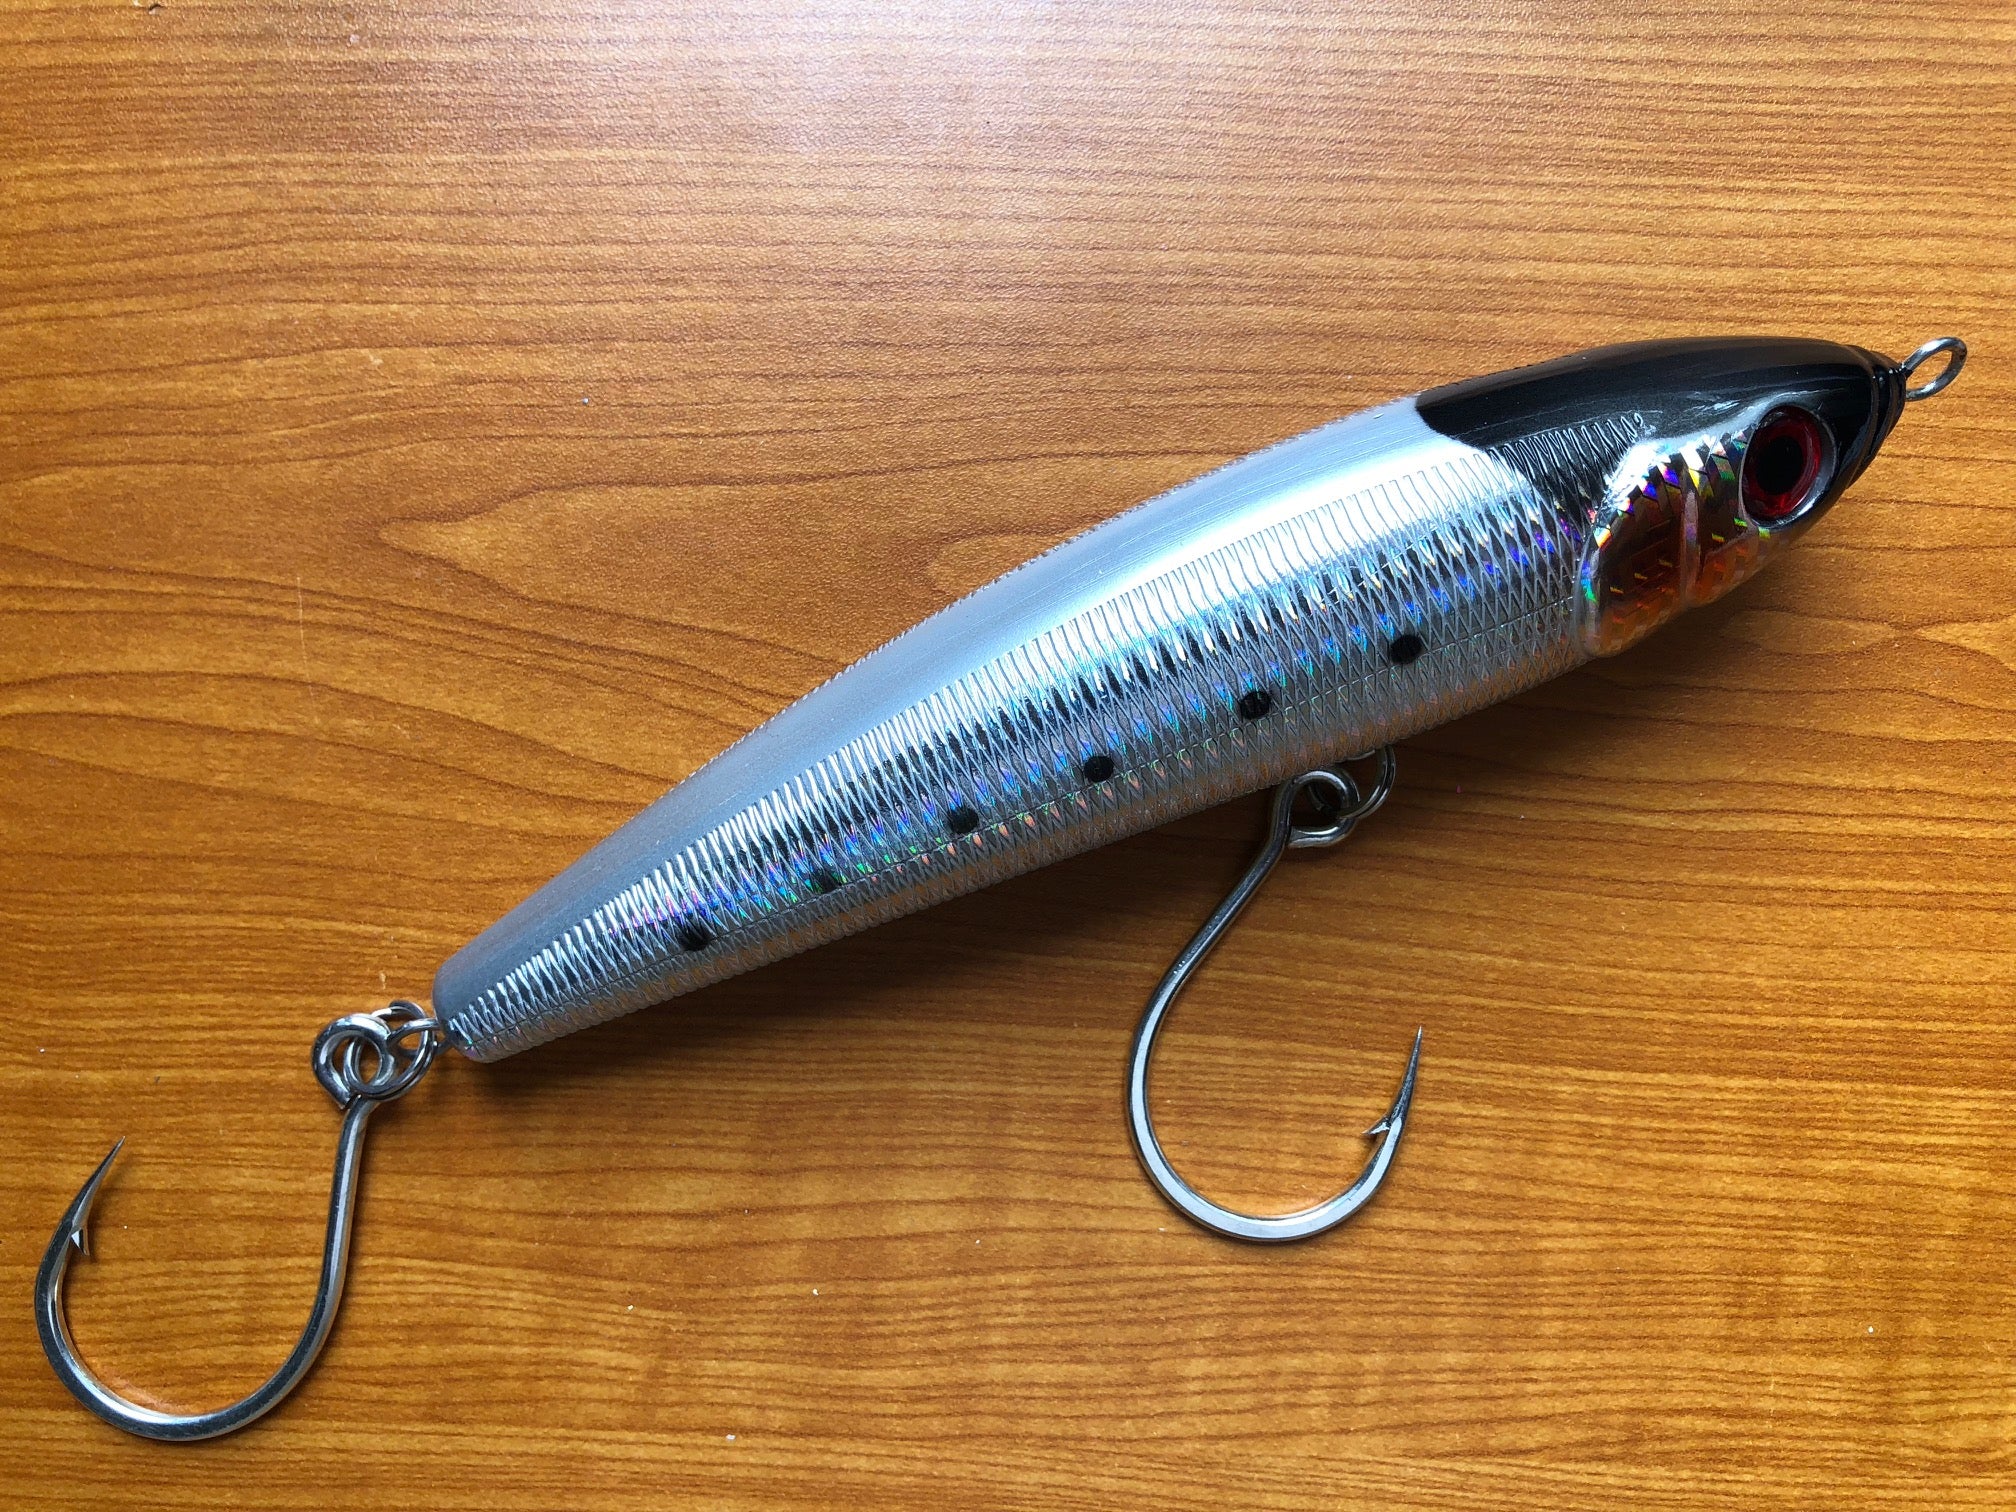 180mm Stick Baits - Pelagics - GT's, Kingfish, Mackerel, Tuna, Coral Trout  +++